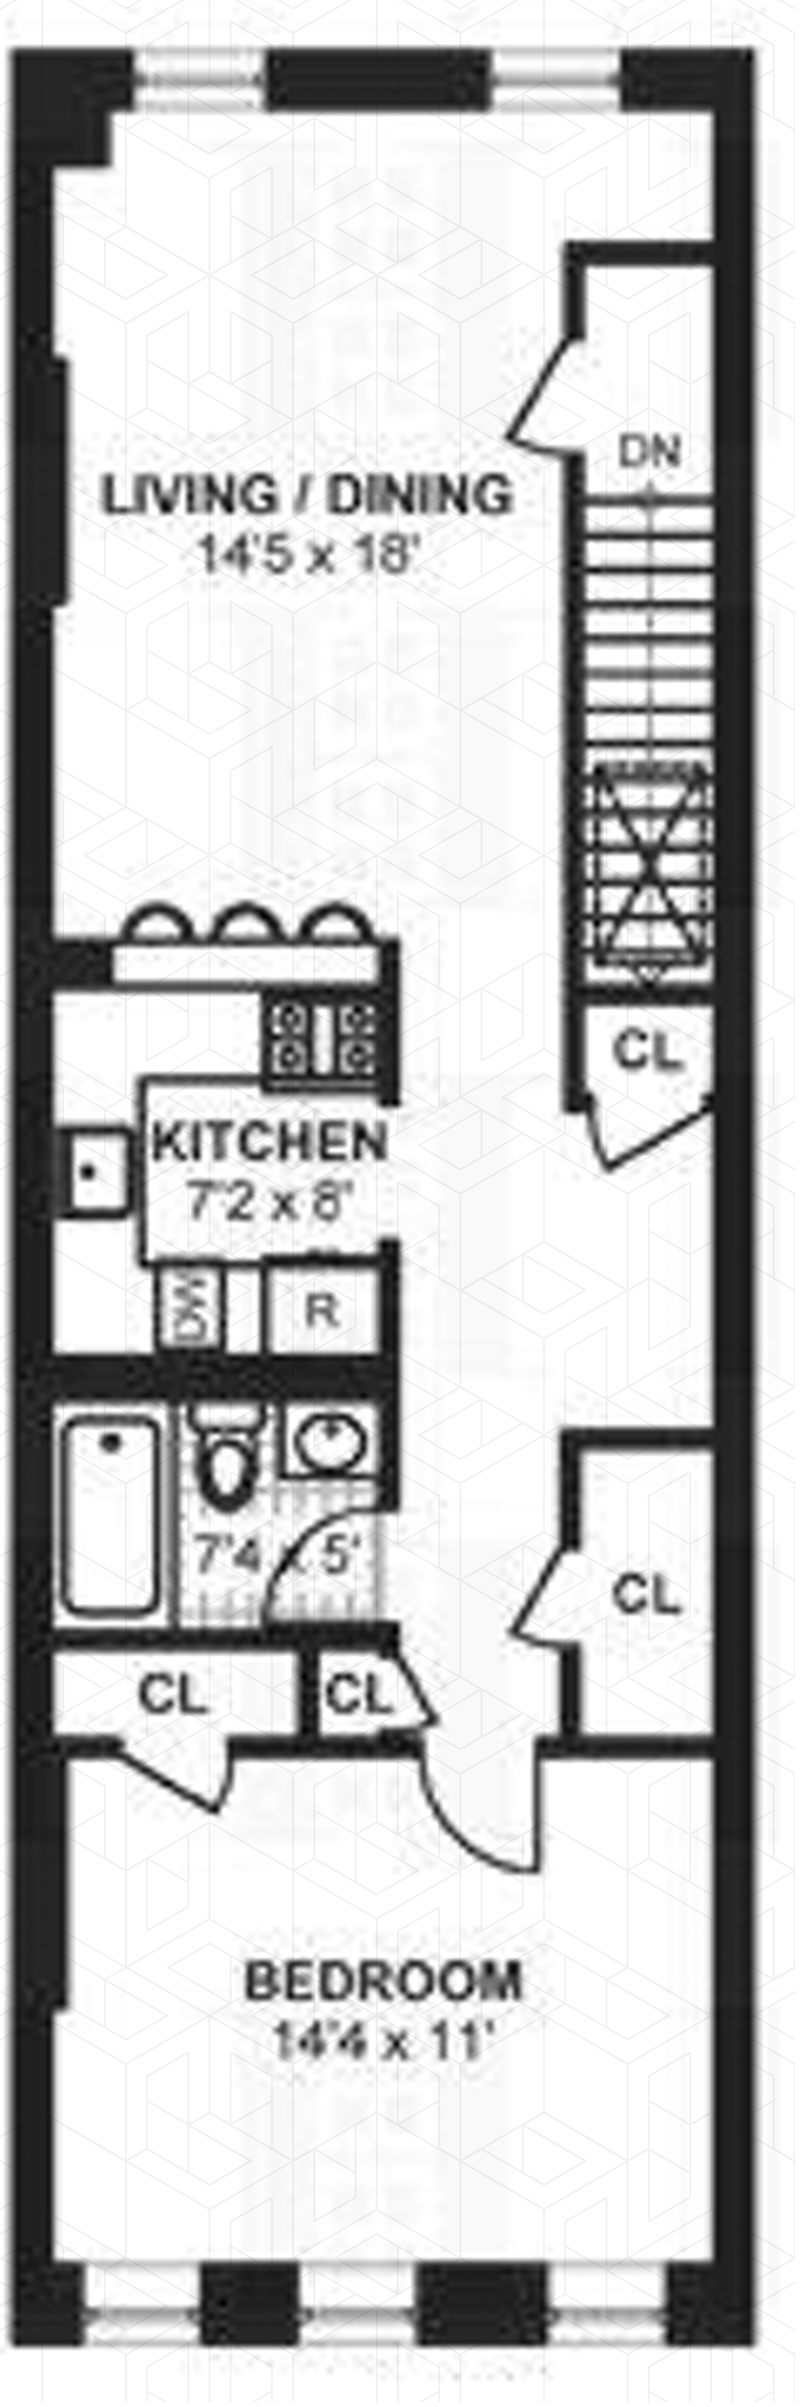 Floorplan for 164 West 133rd Street, 2